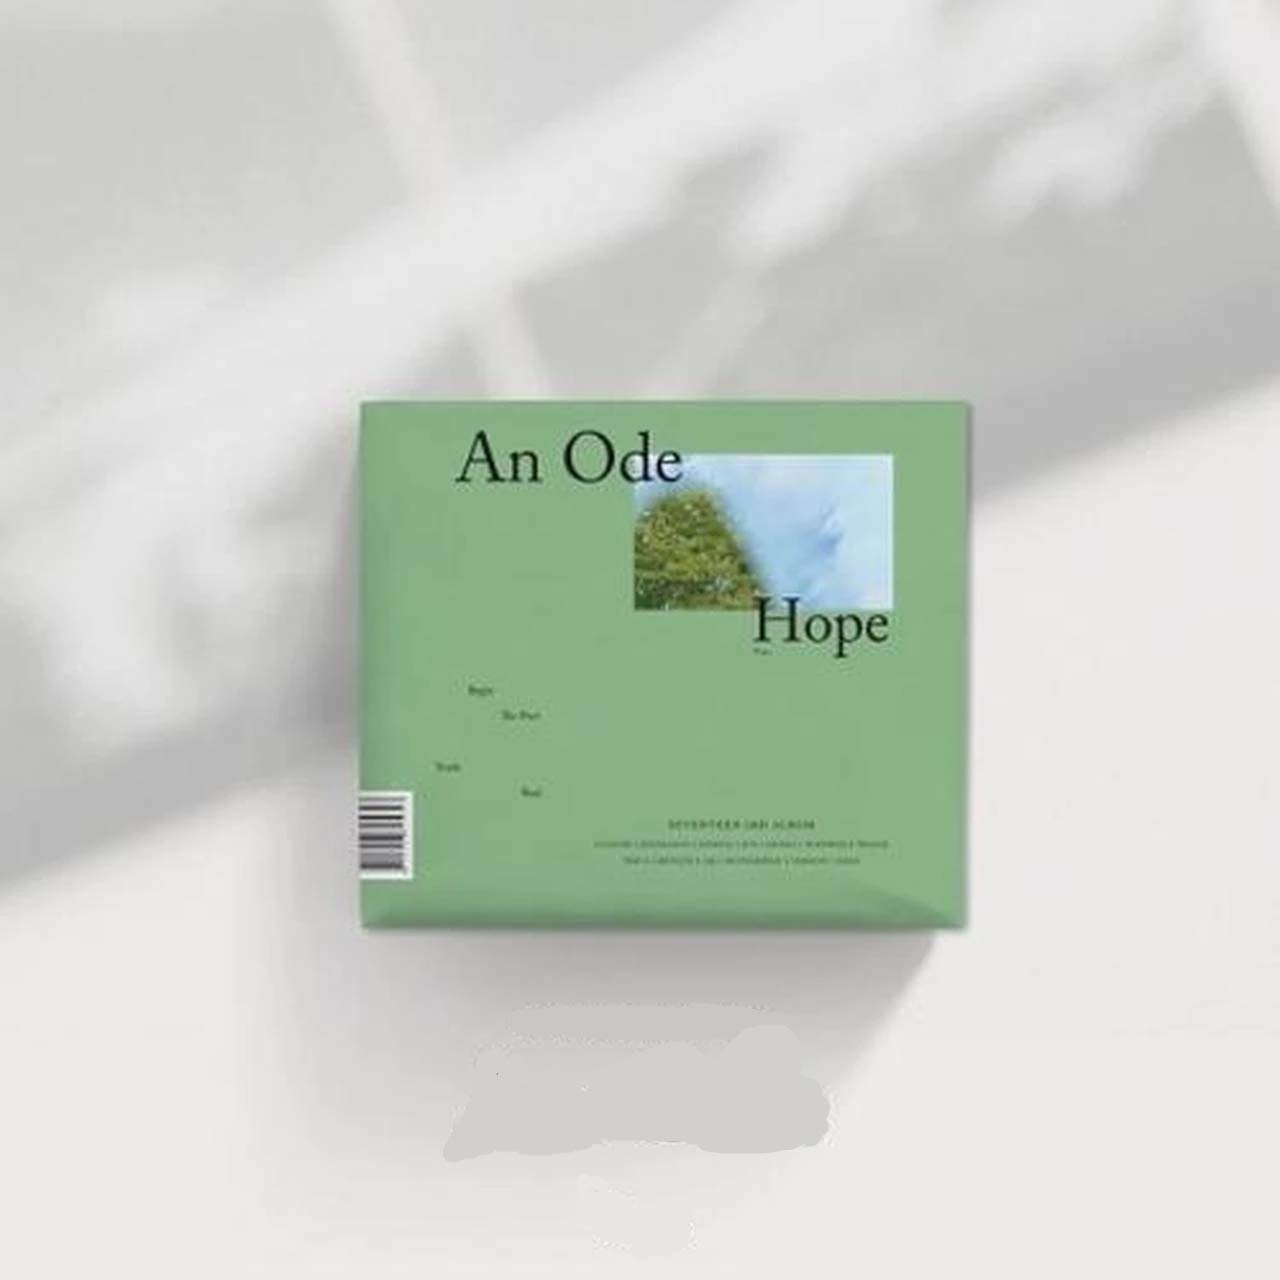 Mua Seventeen 'An Ode' 3rd Regular Album Version.3 Hope-Green CD+104p PhotoBook+8p Mini Book+4p PhotoCard+Message PhotoCard SET+Tracking Kpop Sealed trên Amazon Mỹ chính hãng 2022 | Fado